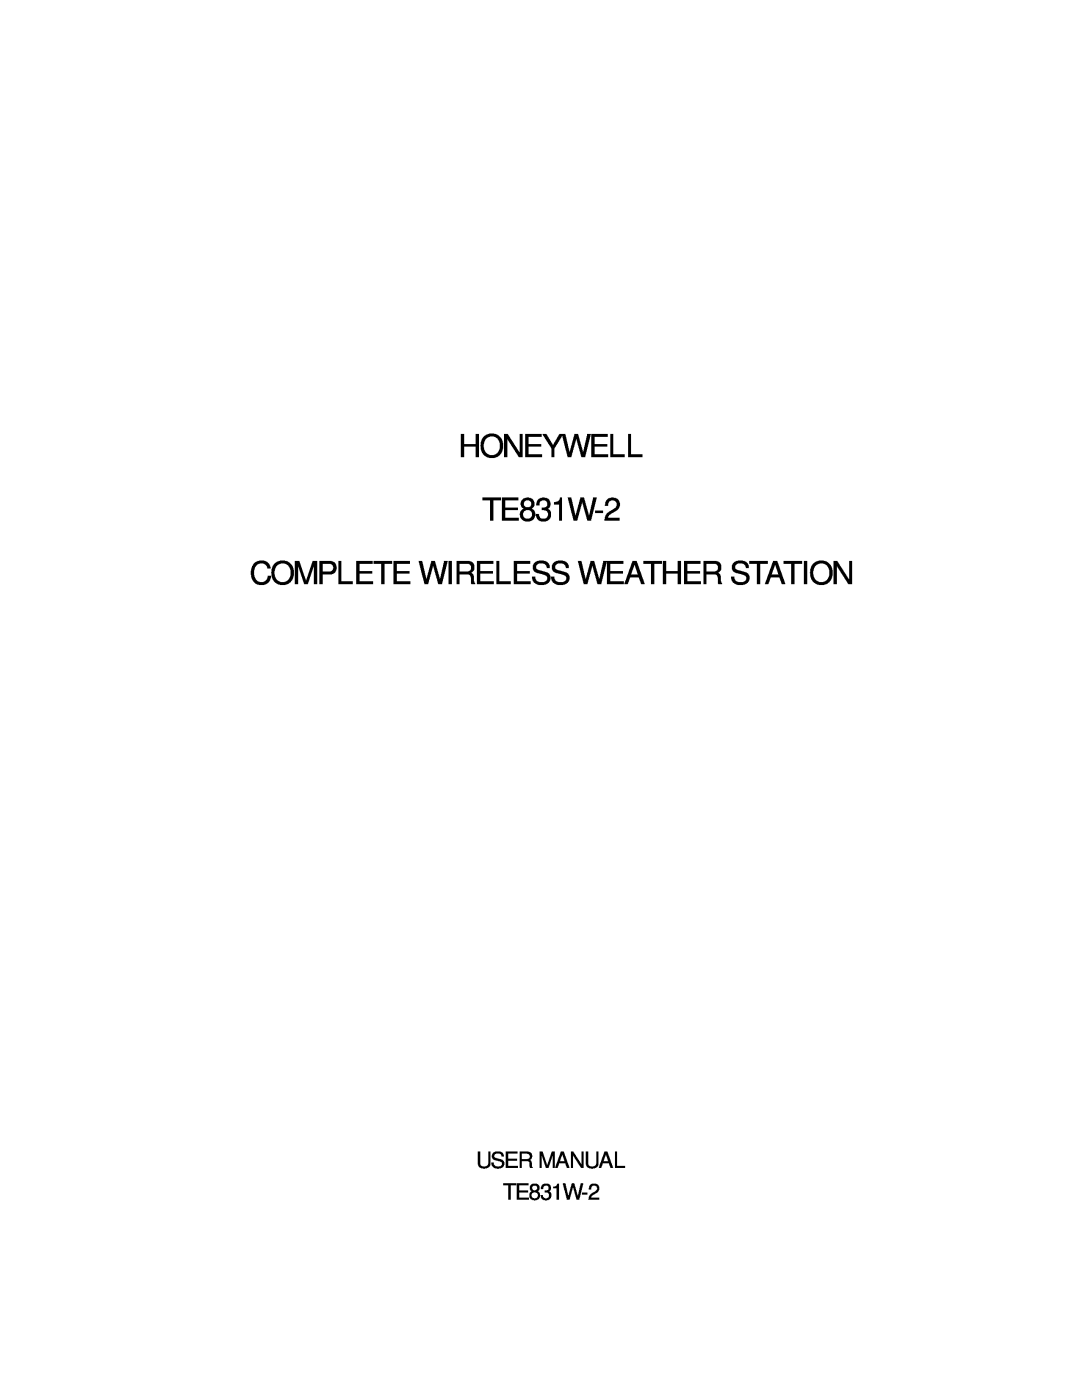 Honeywell user manual USER MANUAL TE831W-2, HONEYWELL TE831W-2 COMPLETE WIRELESS WEATHER STATION 